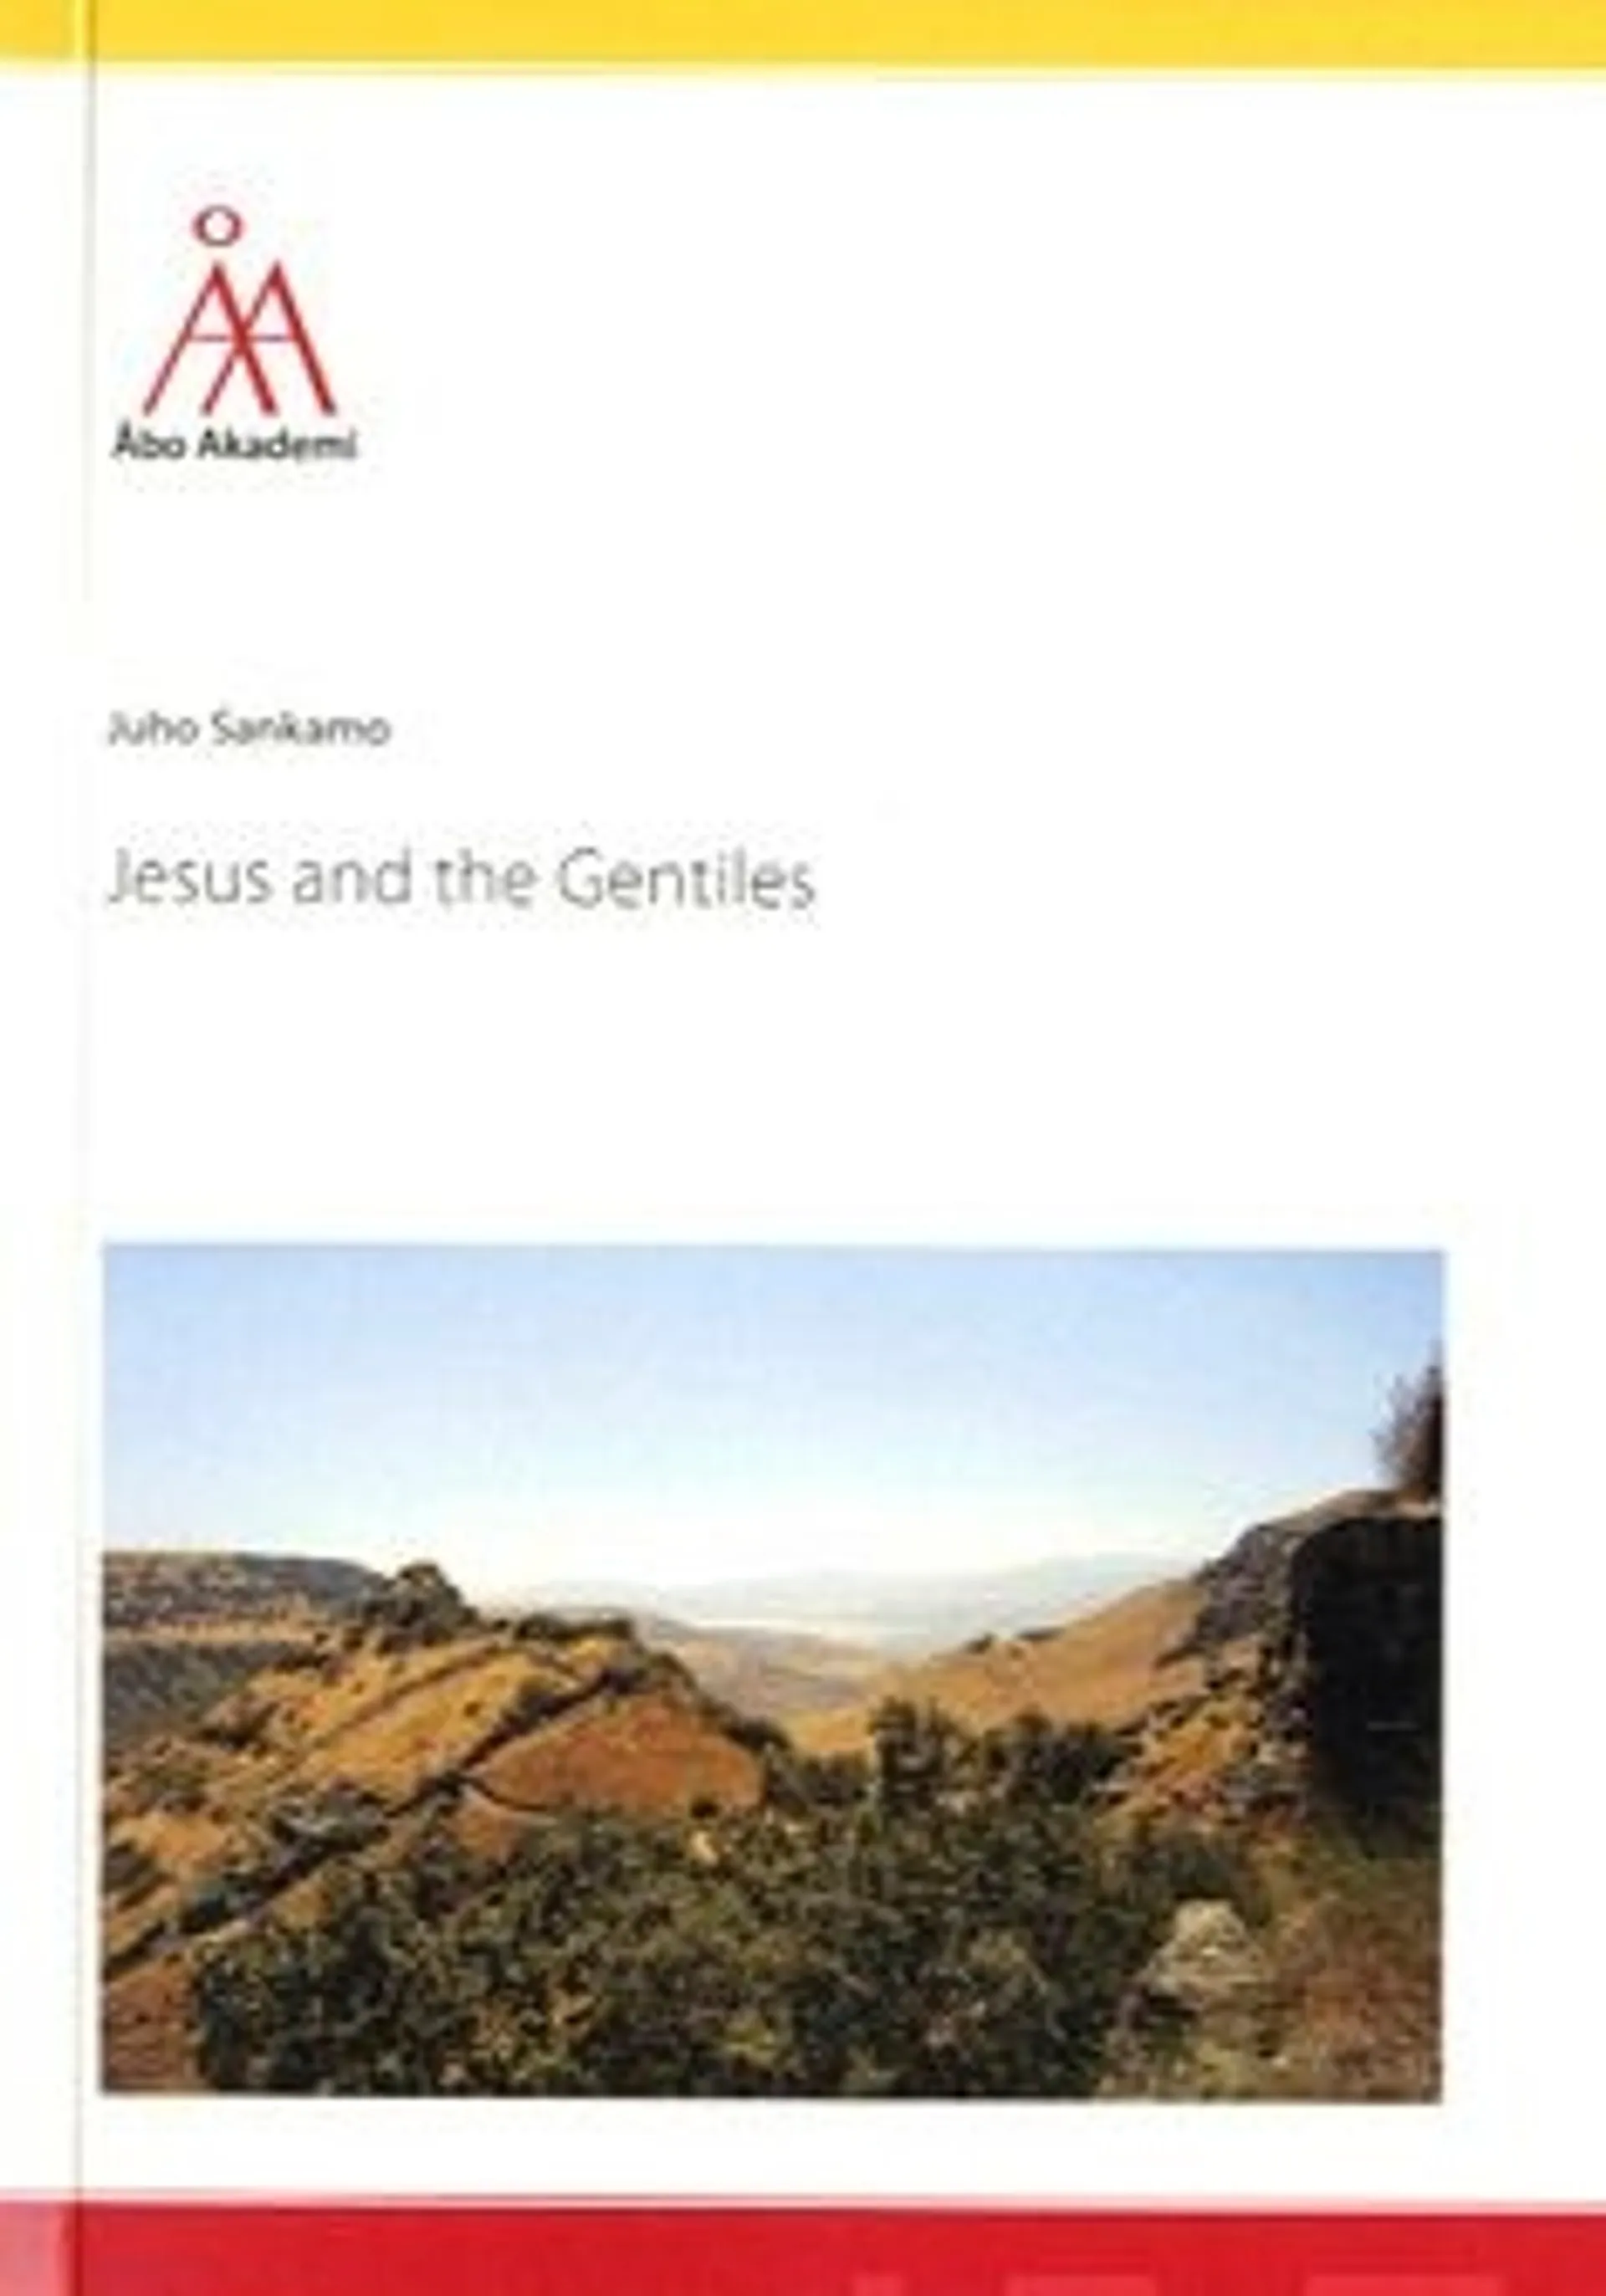 Sankamo, Jesus and the Gentiles